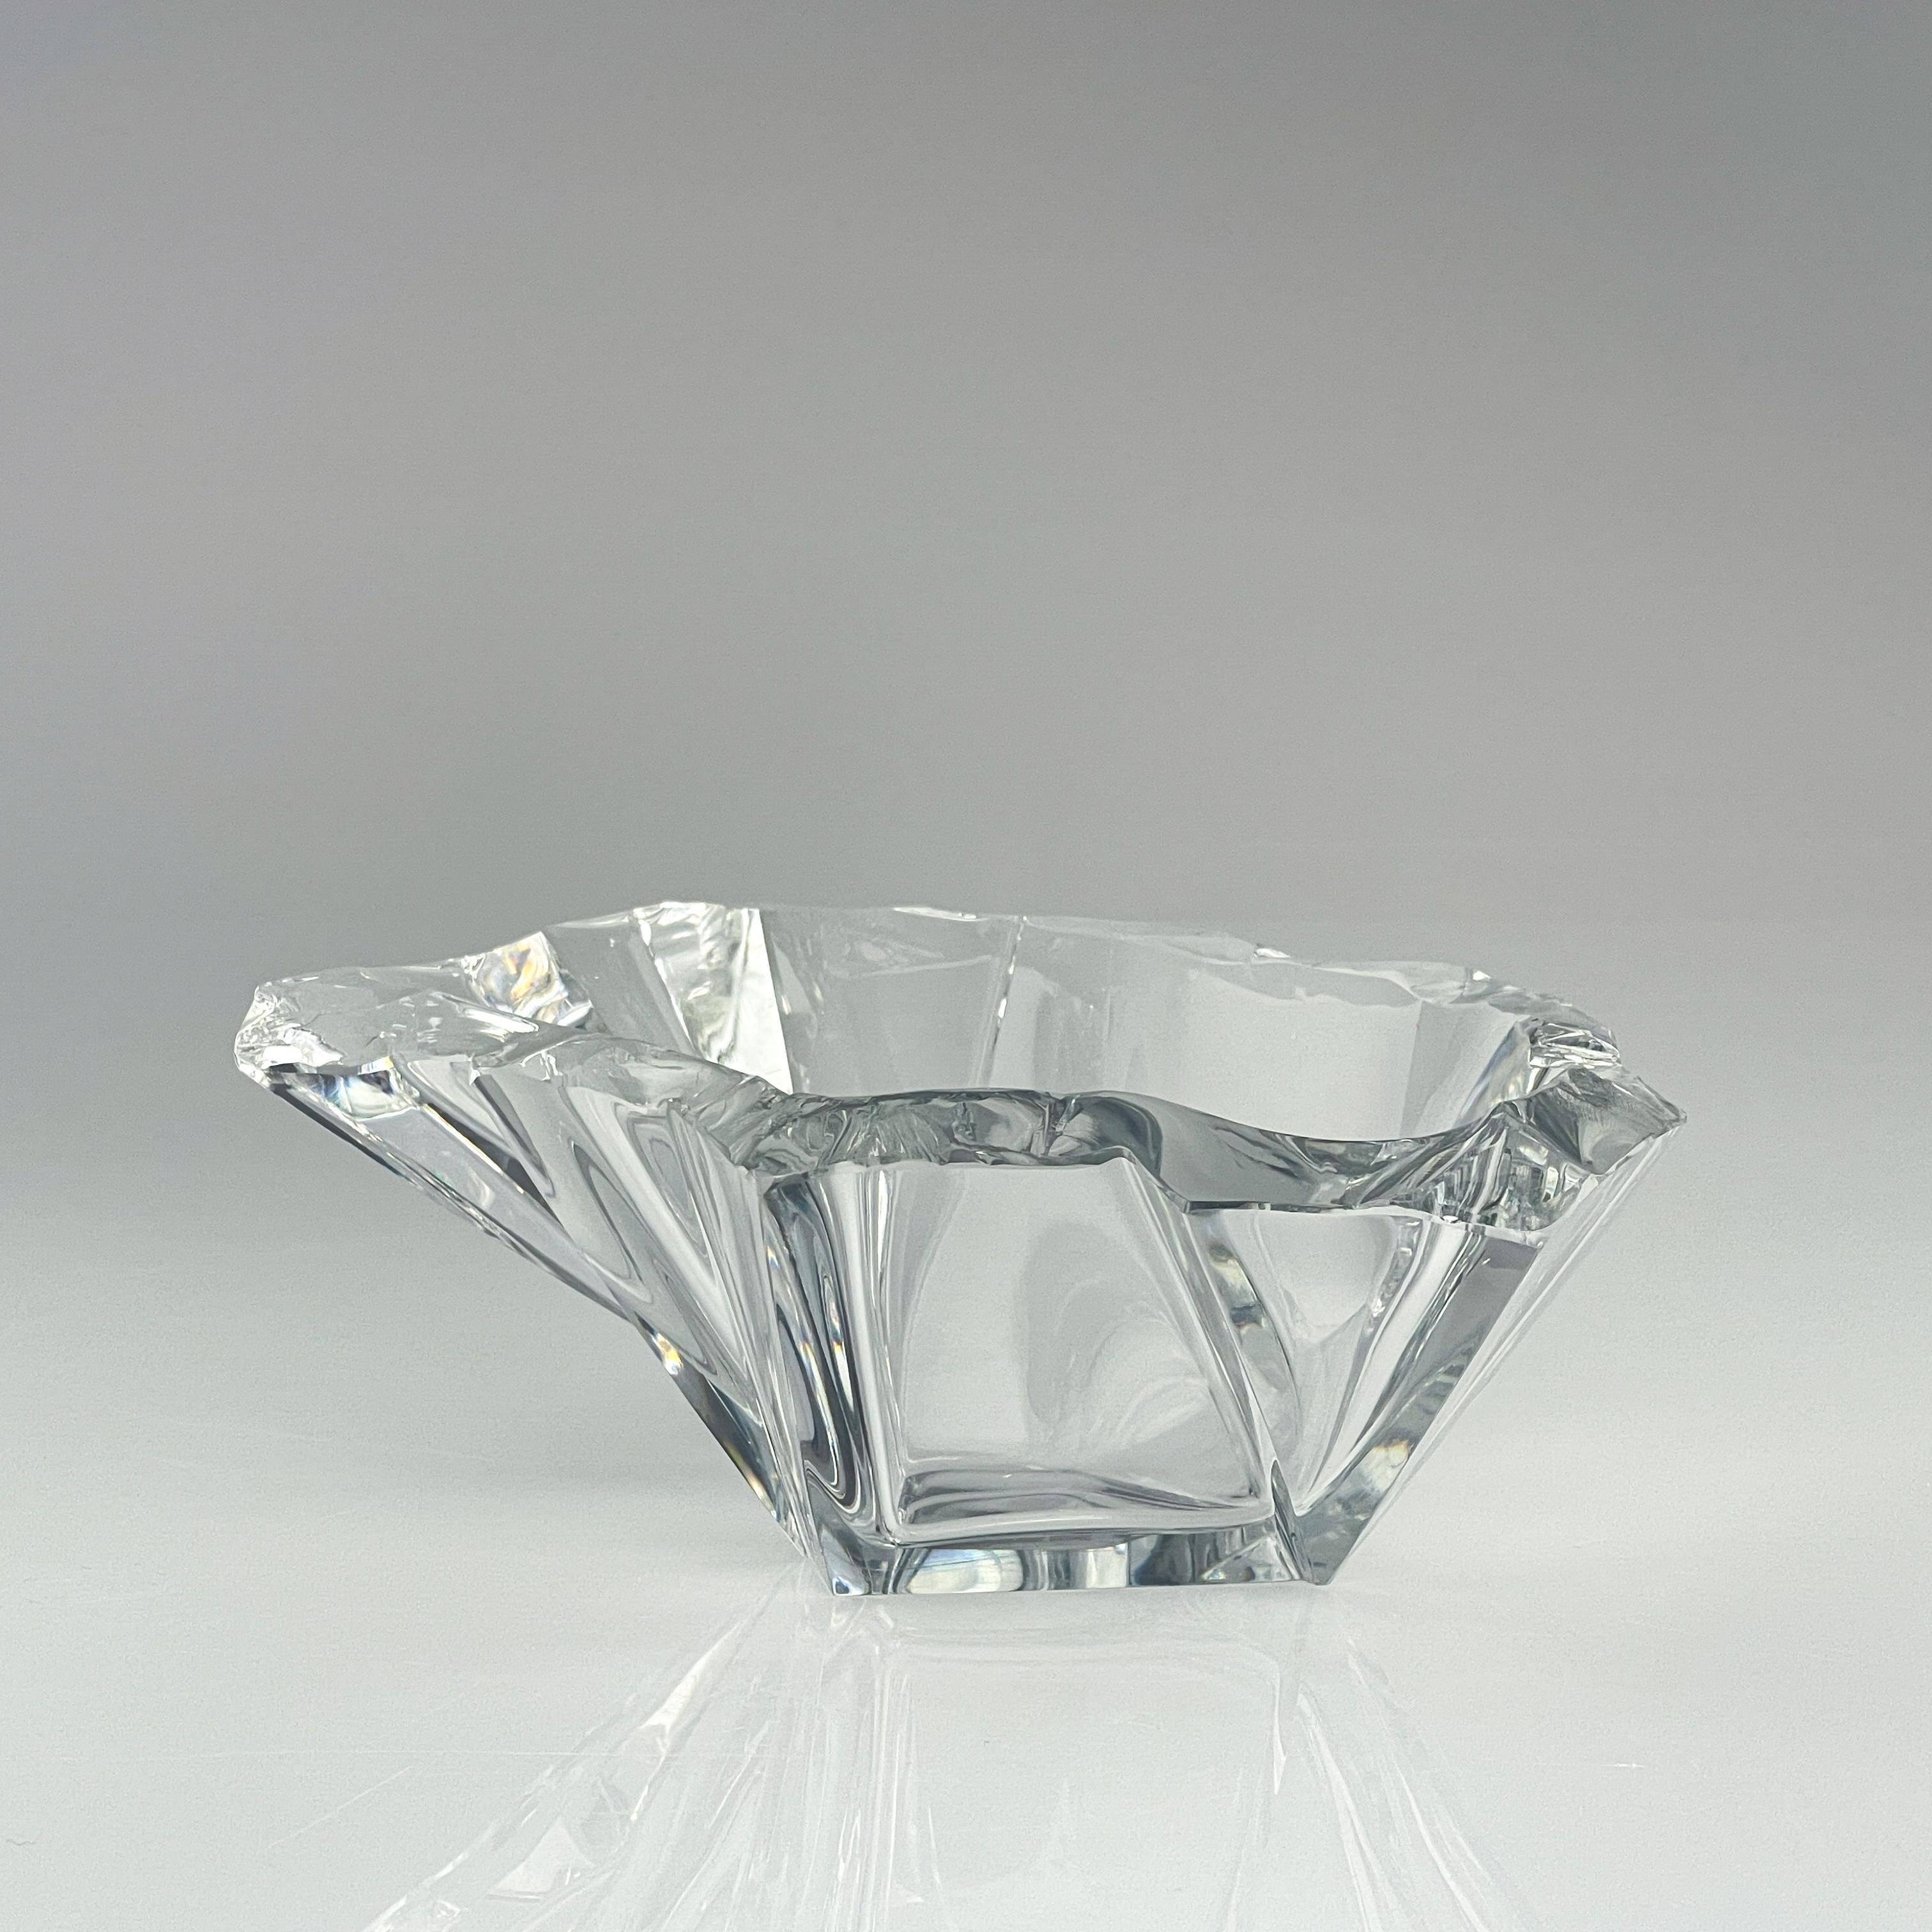 Tapio Wirkkala – A crystal Art-object “Jäänsäro” or “Iceblock”, model 3847 – Iittala, Finland circa 1960

A mesmerizing blend of stillness and craftsmanship, the 